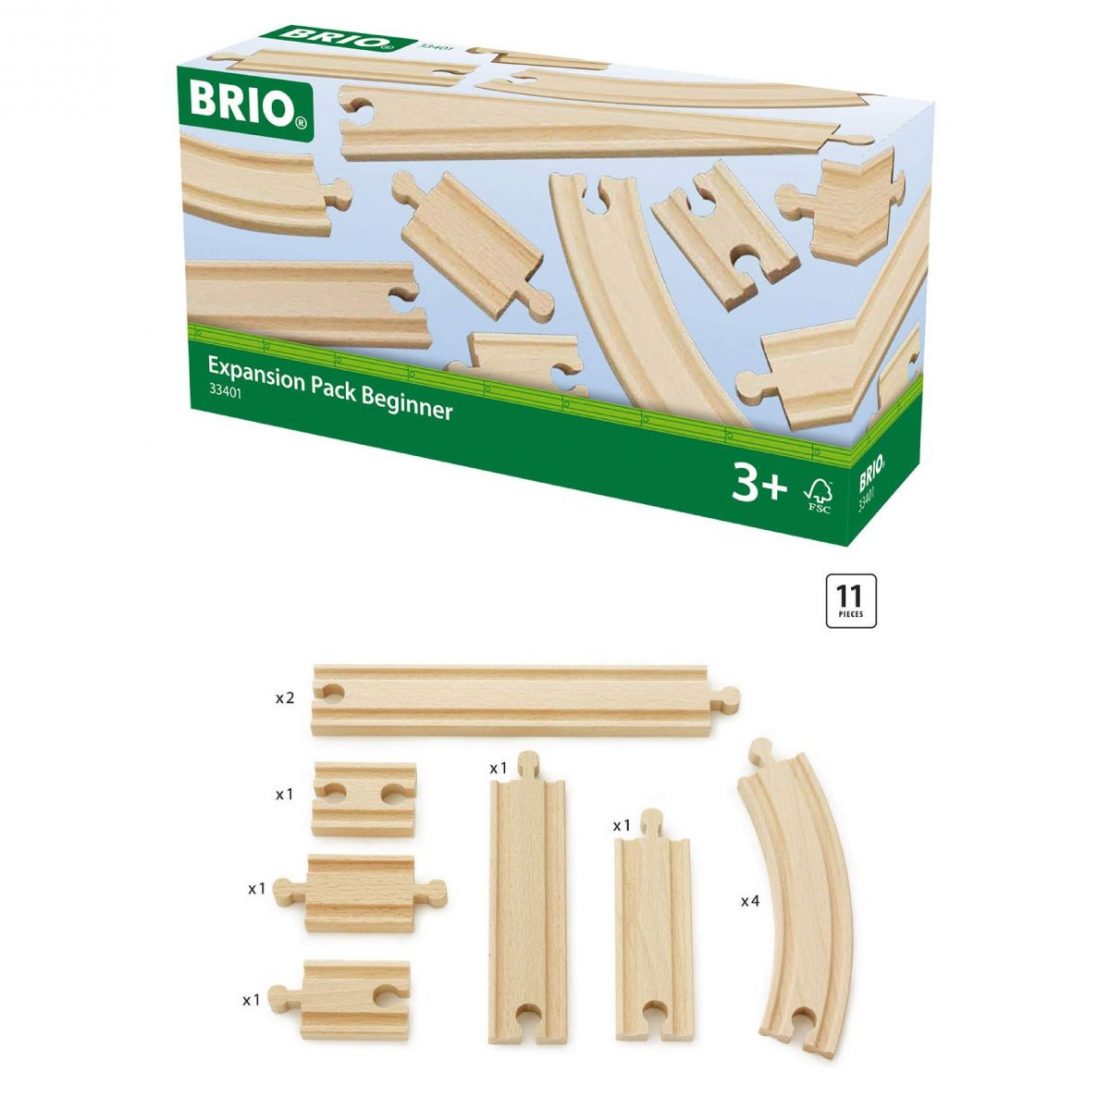 brio expansion pack beginner